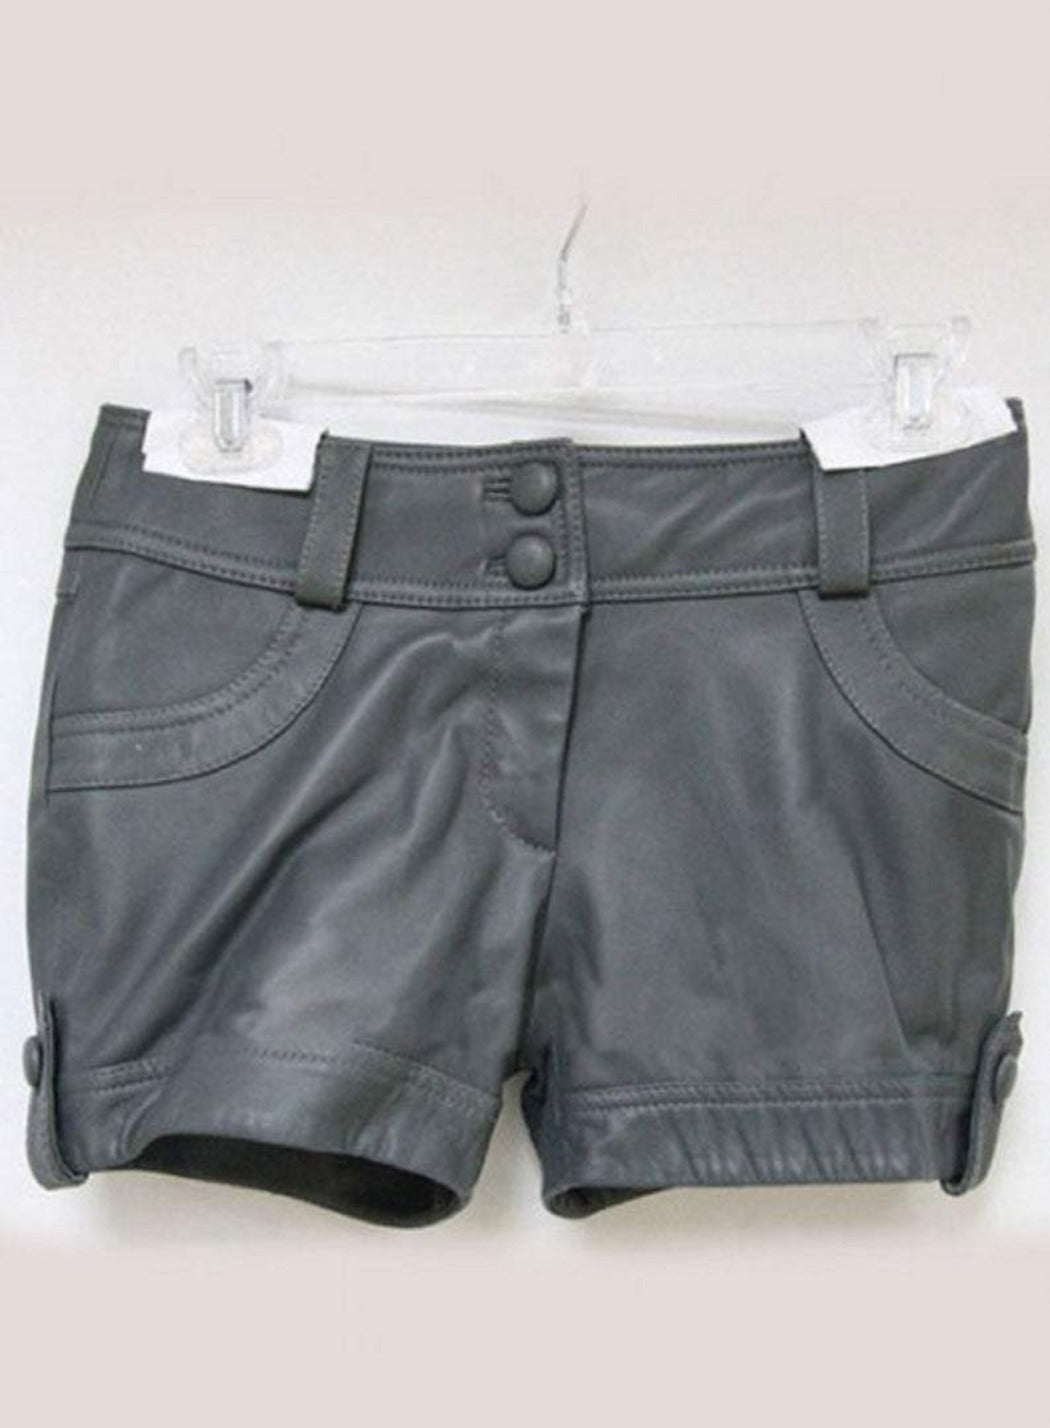 NOORA Womens,Girls & Lady Cargo Short Pant, Ladies Original Lambskin Leather Shorts Pant Casual Wear Shorts Grey Leather Shorts SB149